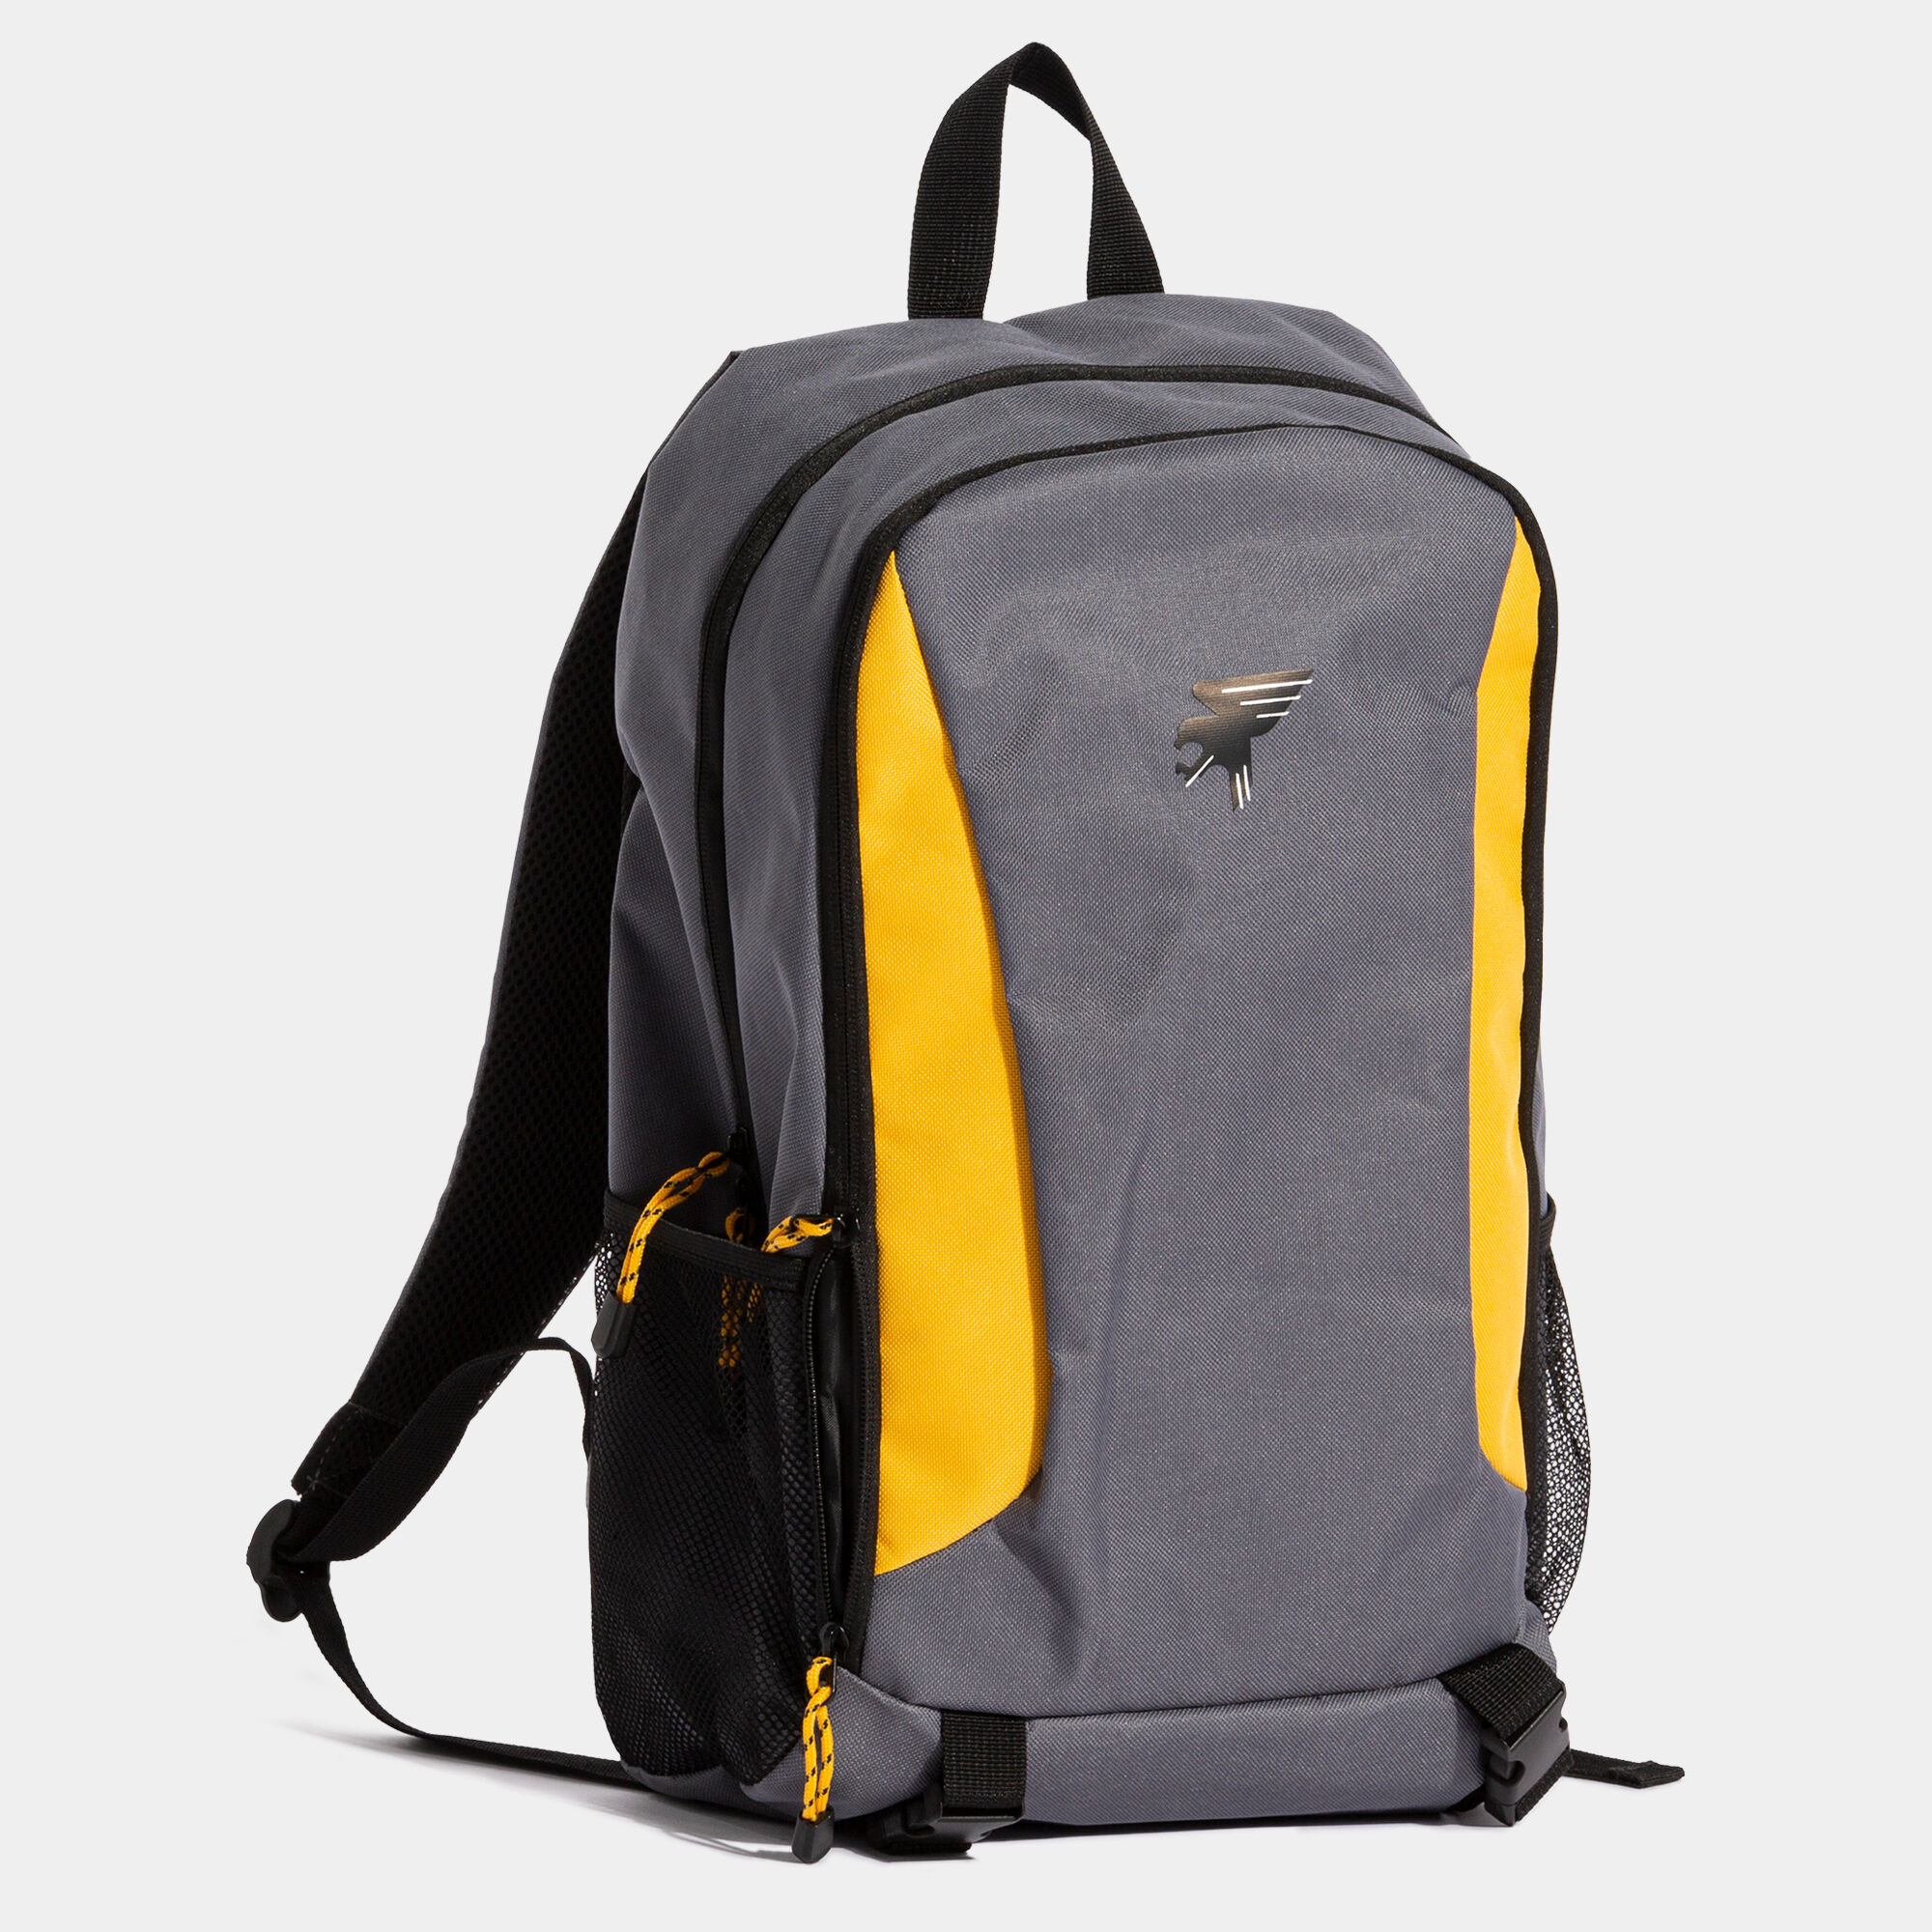 Rucksack - shoe bag Explorer dunkelgrau gelb